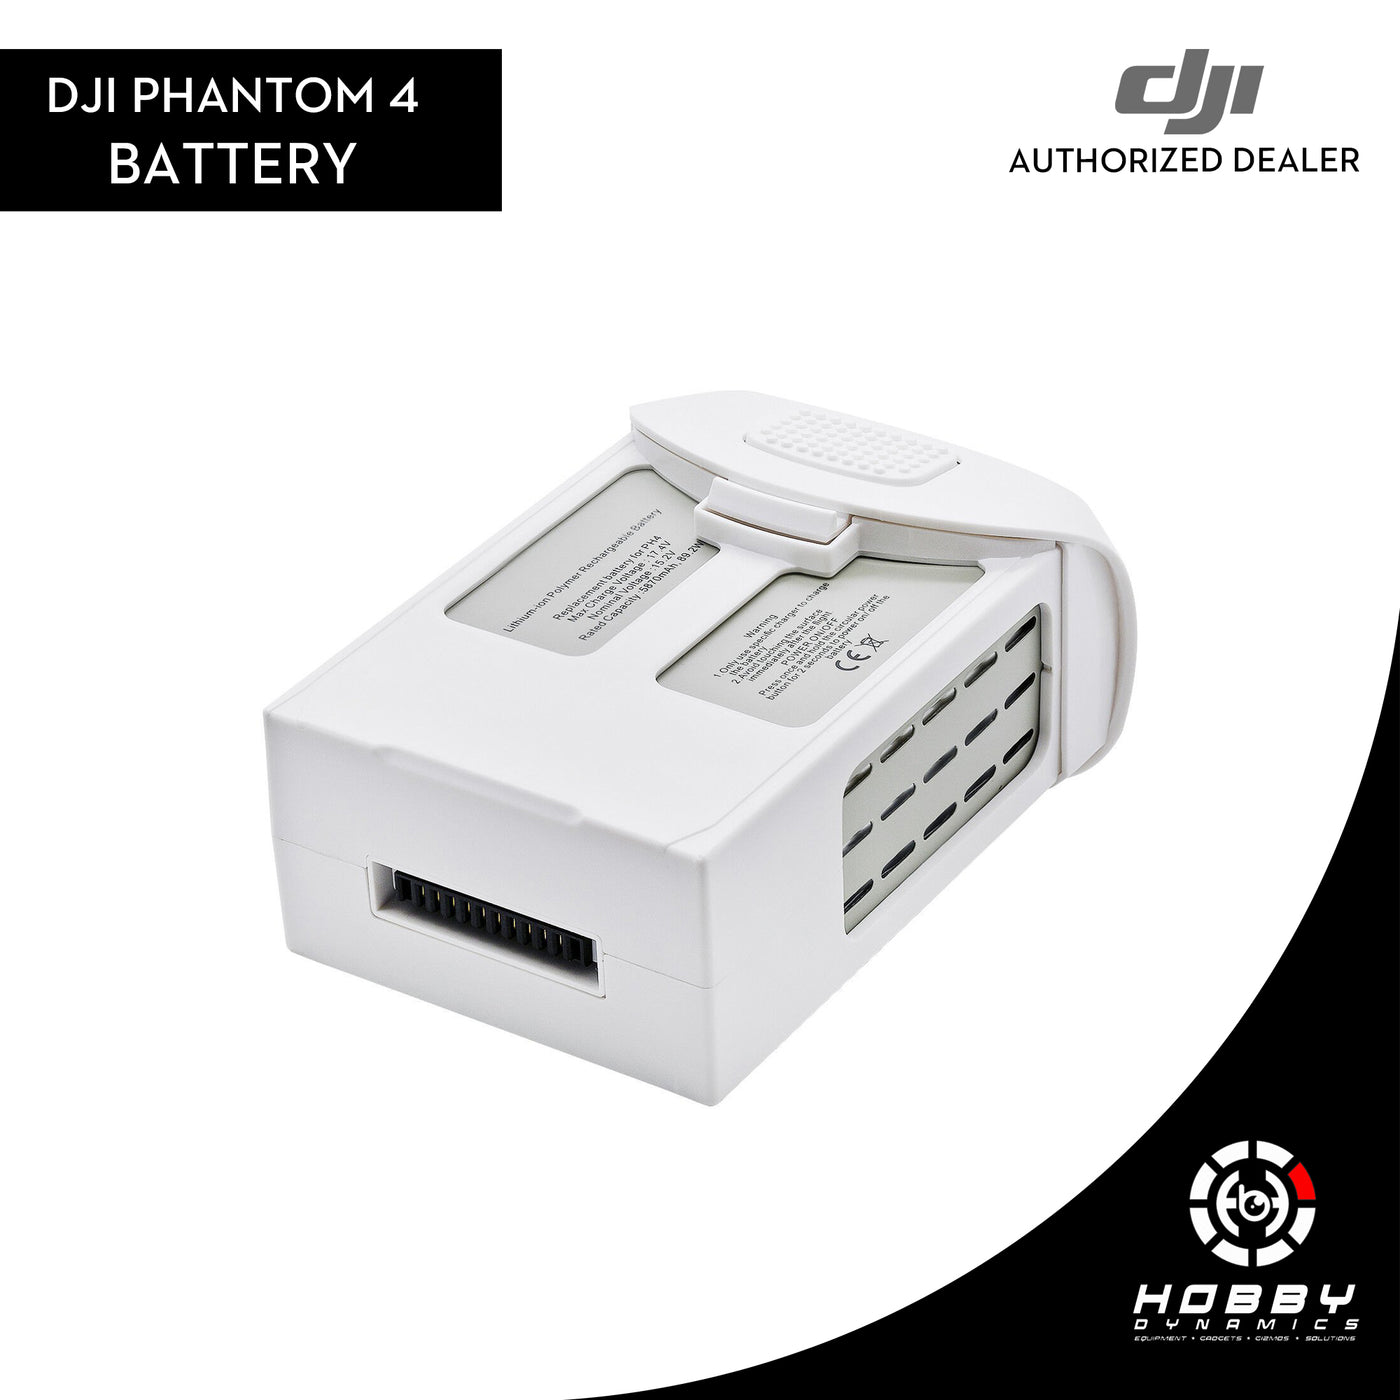 DJI Phantom 4 5870MAH High Capacity Intelligent Flight Battery